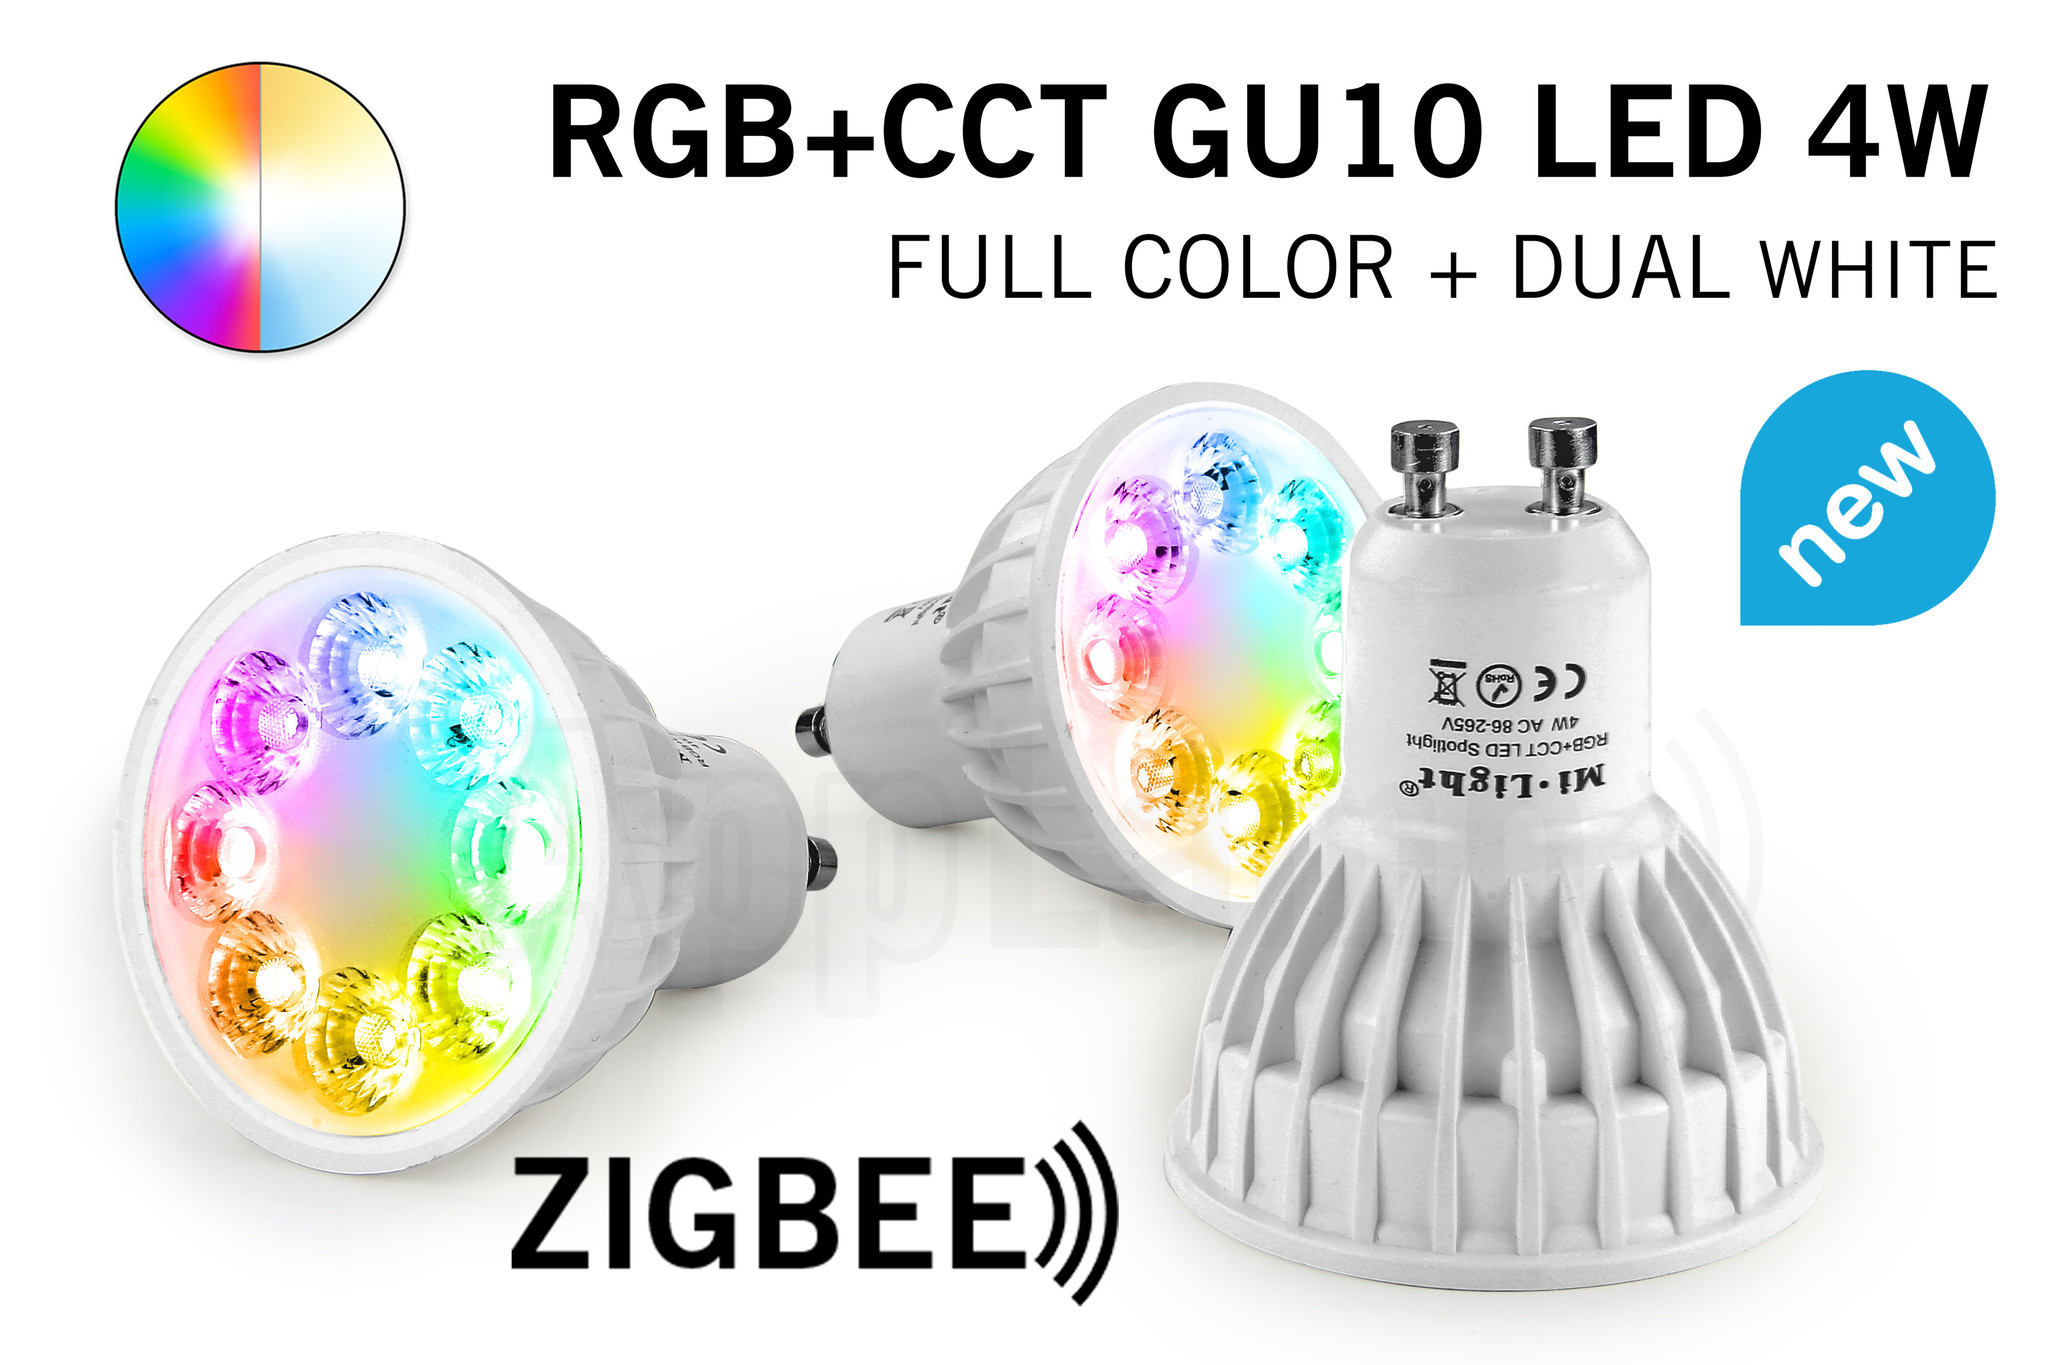 Mi·Light Mi-Light Zigbee 4W RGBWW Kleur + Dual White Dimbaar GU10 LED Spot 220V